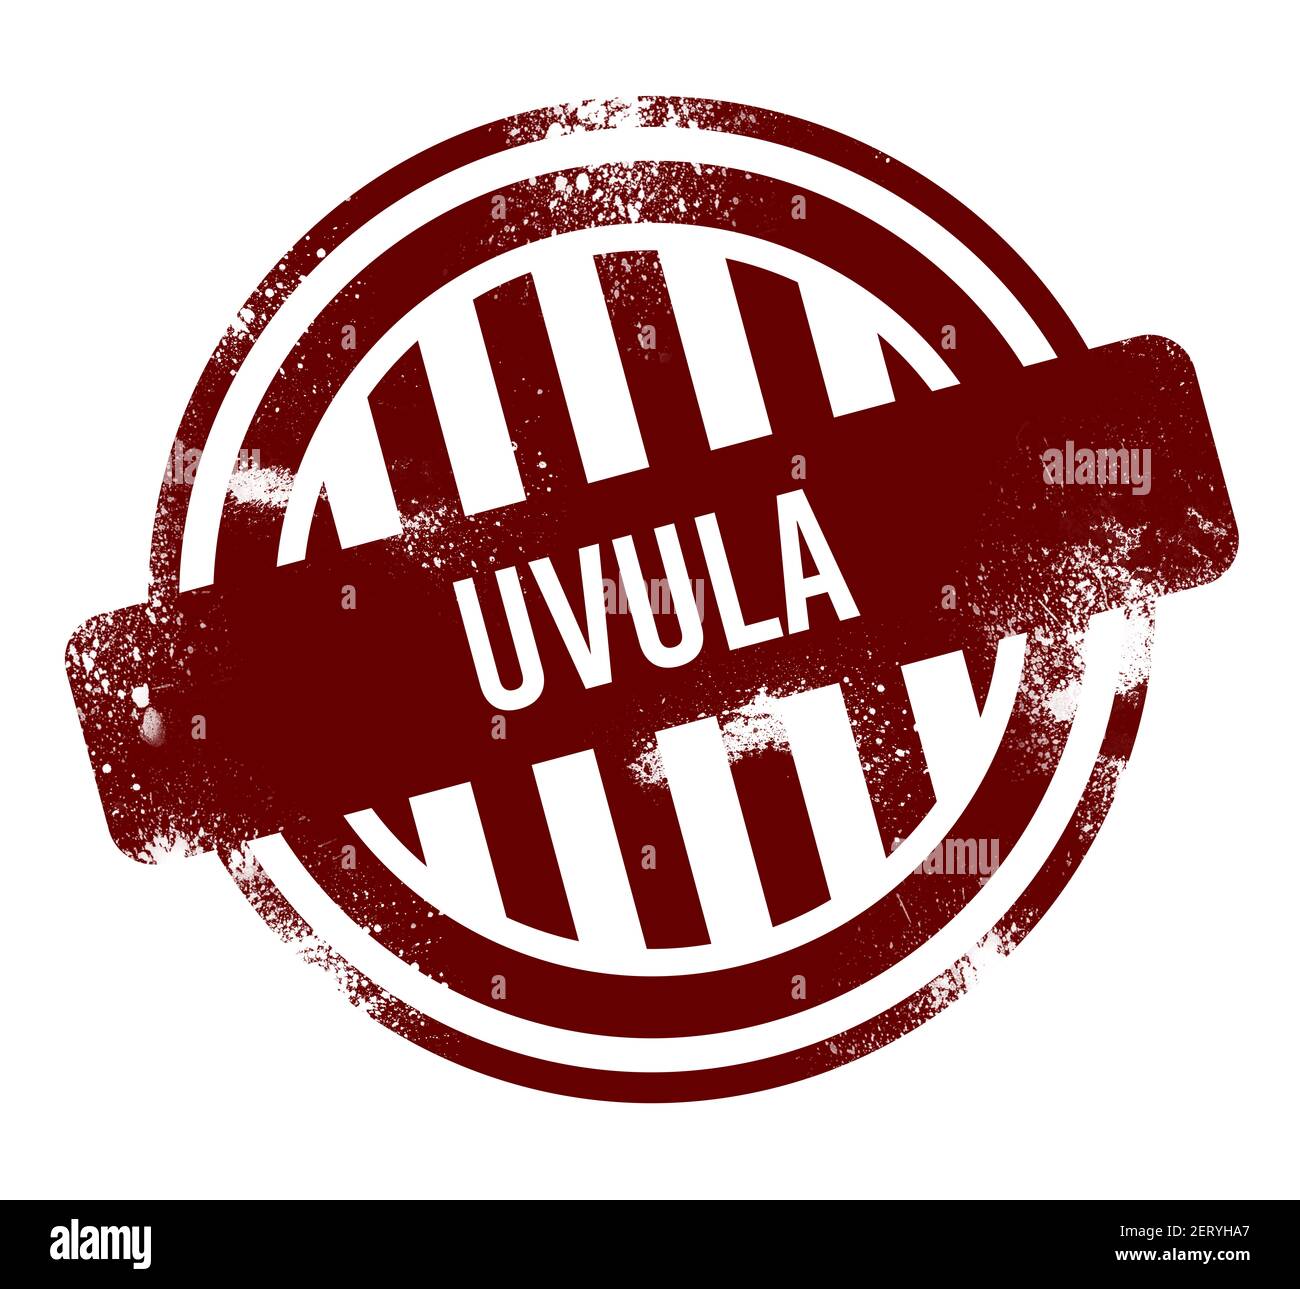 Uvula - red round grunge button, stamp Stock Photo